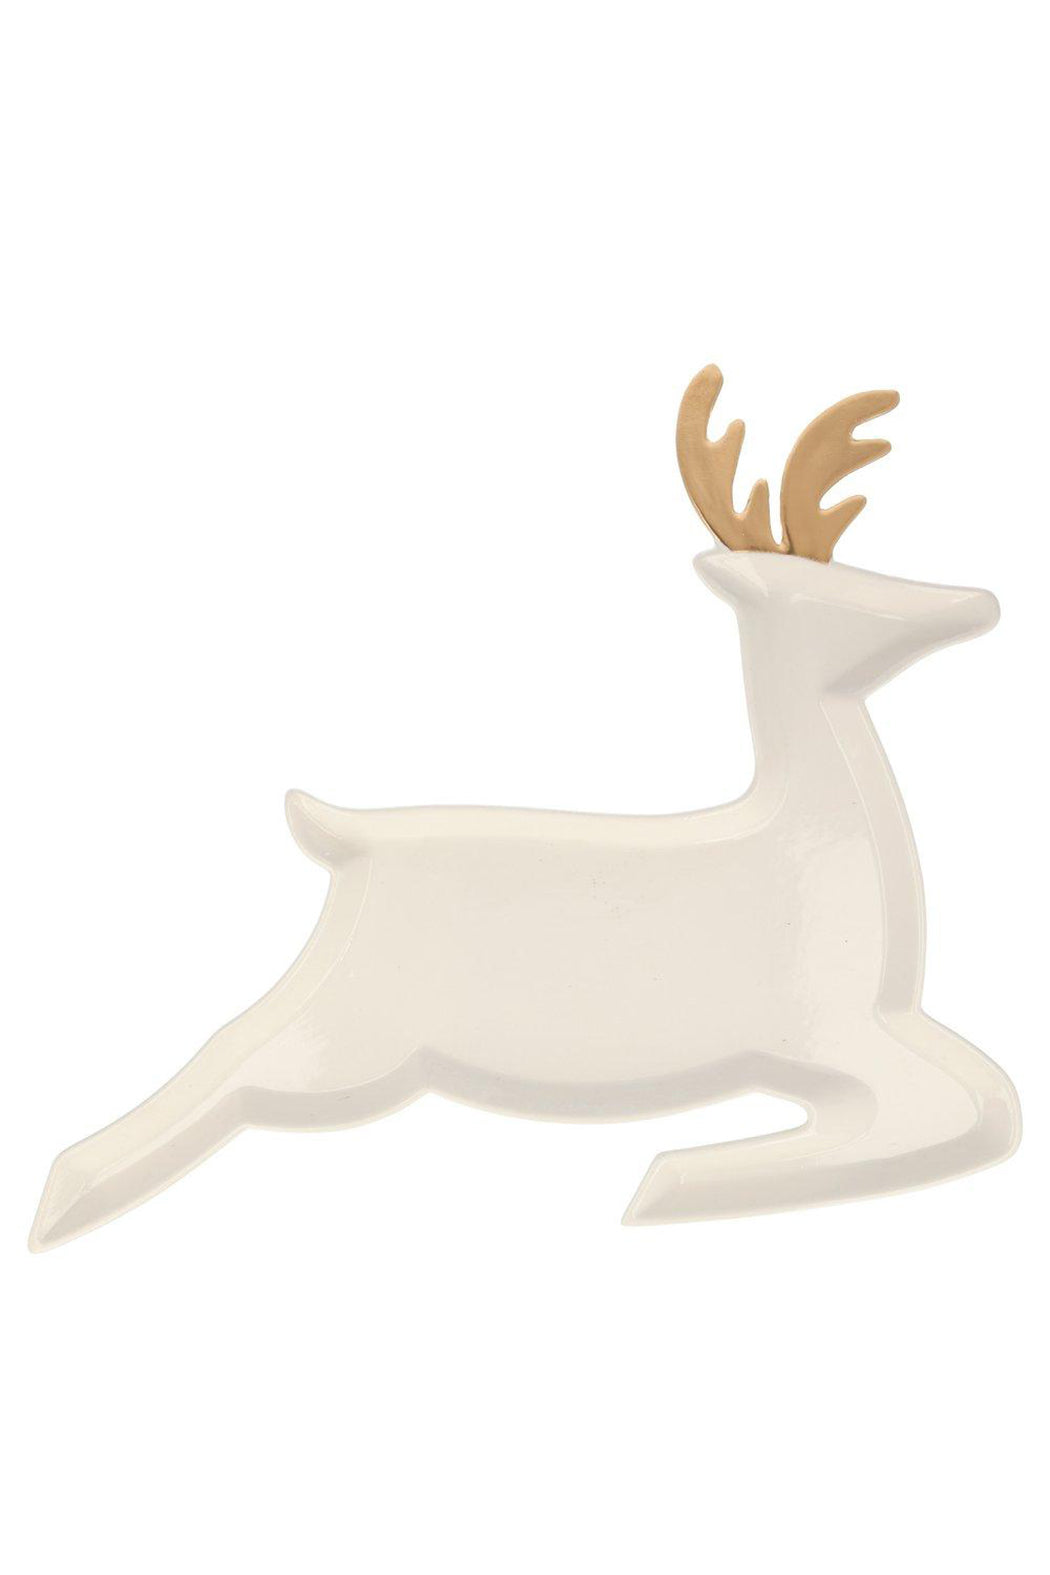 Meri Meri Porcelain Reindeer Plates - Set Of 2